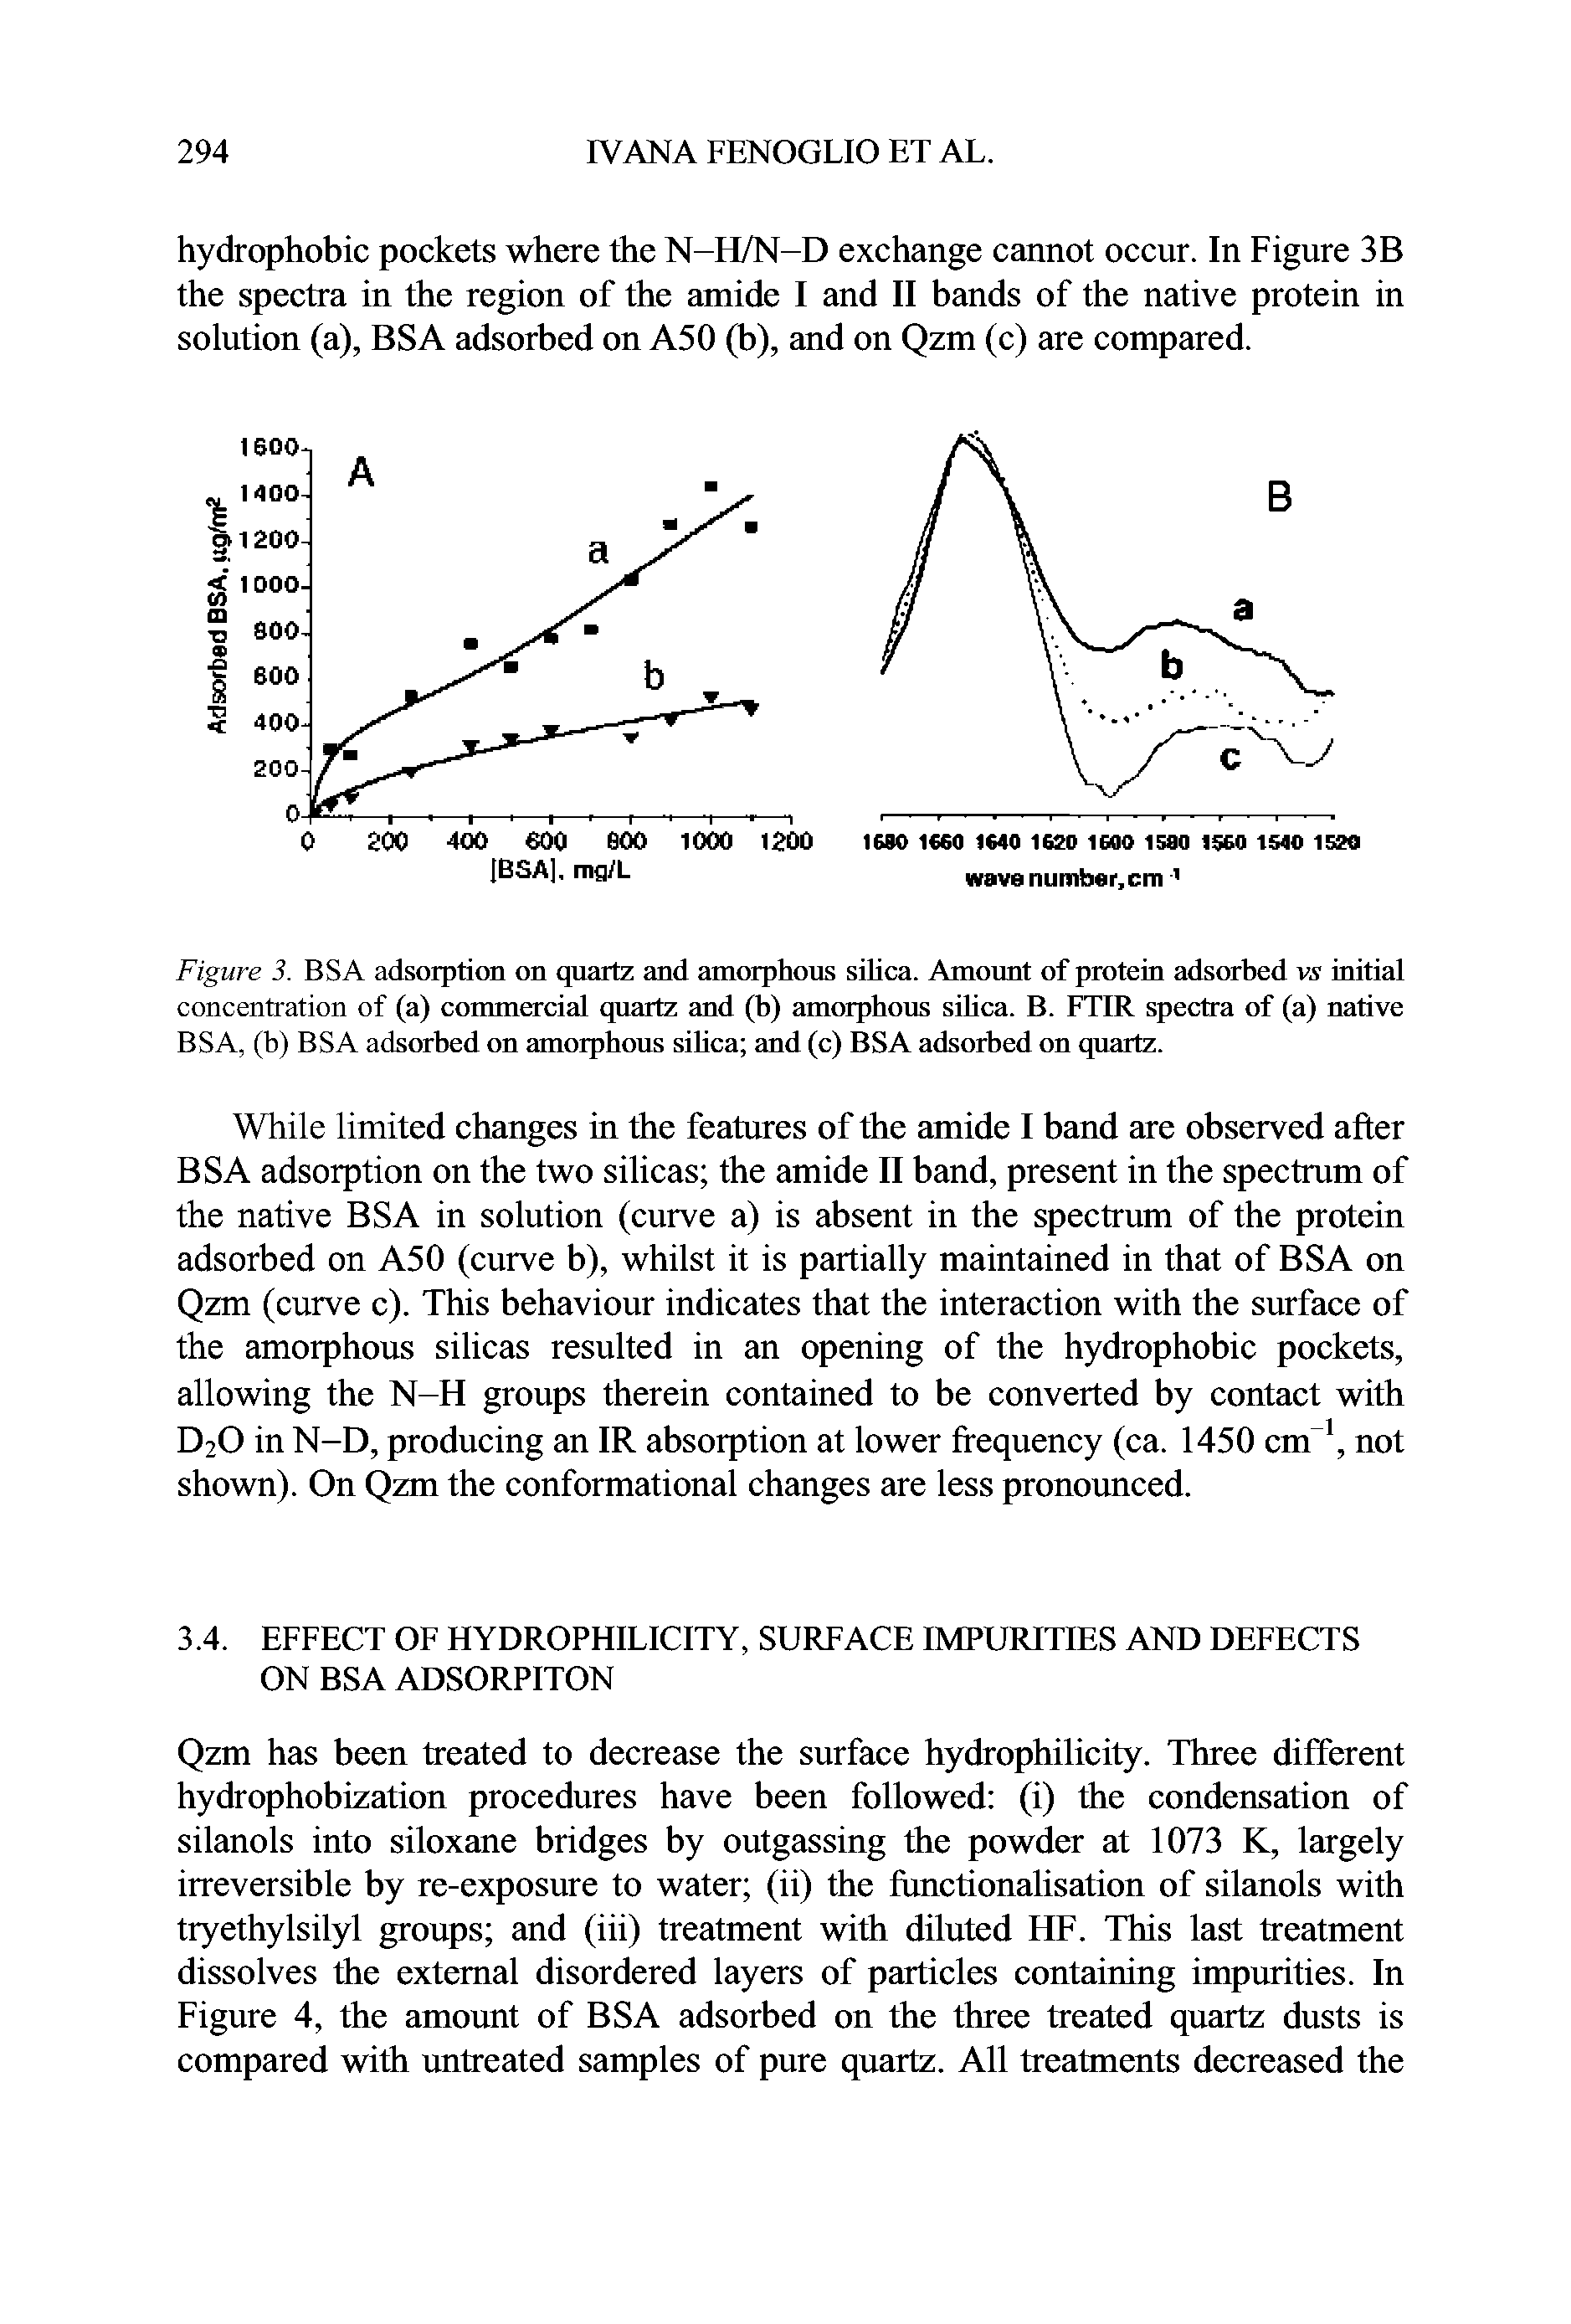 Figure 3. BSA adsorption on quartz and amorphous silica. Amount of protein adsorbed vs initial concentration of (a) commercial quartz and (b) amorphous sihca. B. FTIR spectra of (a) native BSA, (b) BSA adsorbed on amorphous sihca and (c) BSA adsorbed on quartz.